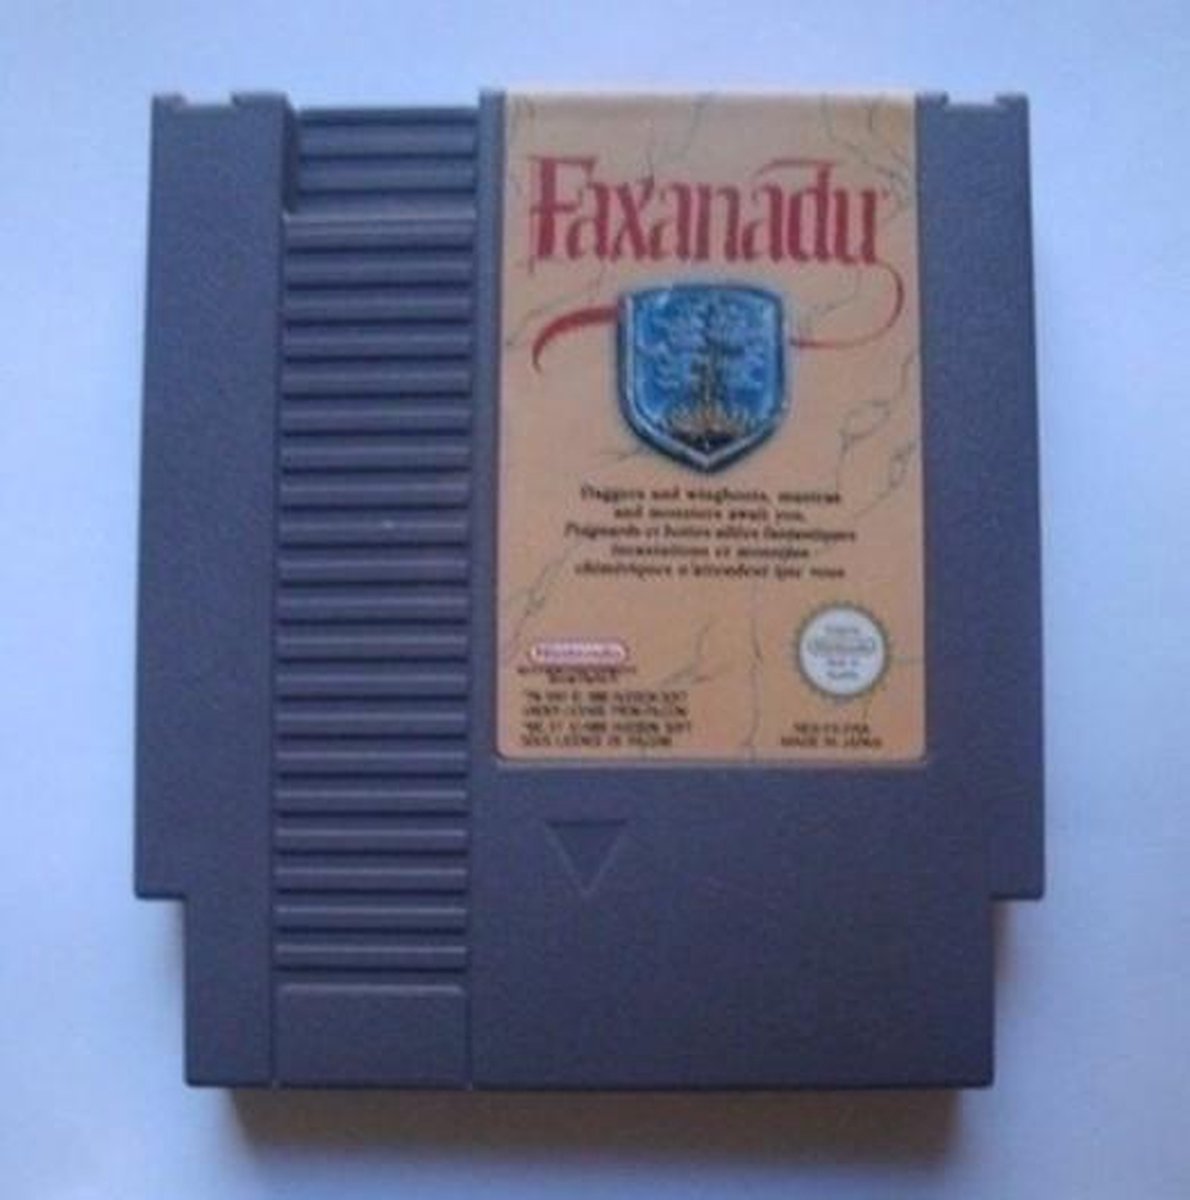 Faxanadu - Nintendo [NES] Game [PAL] - Nintendo